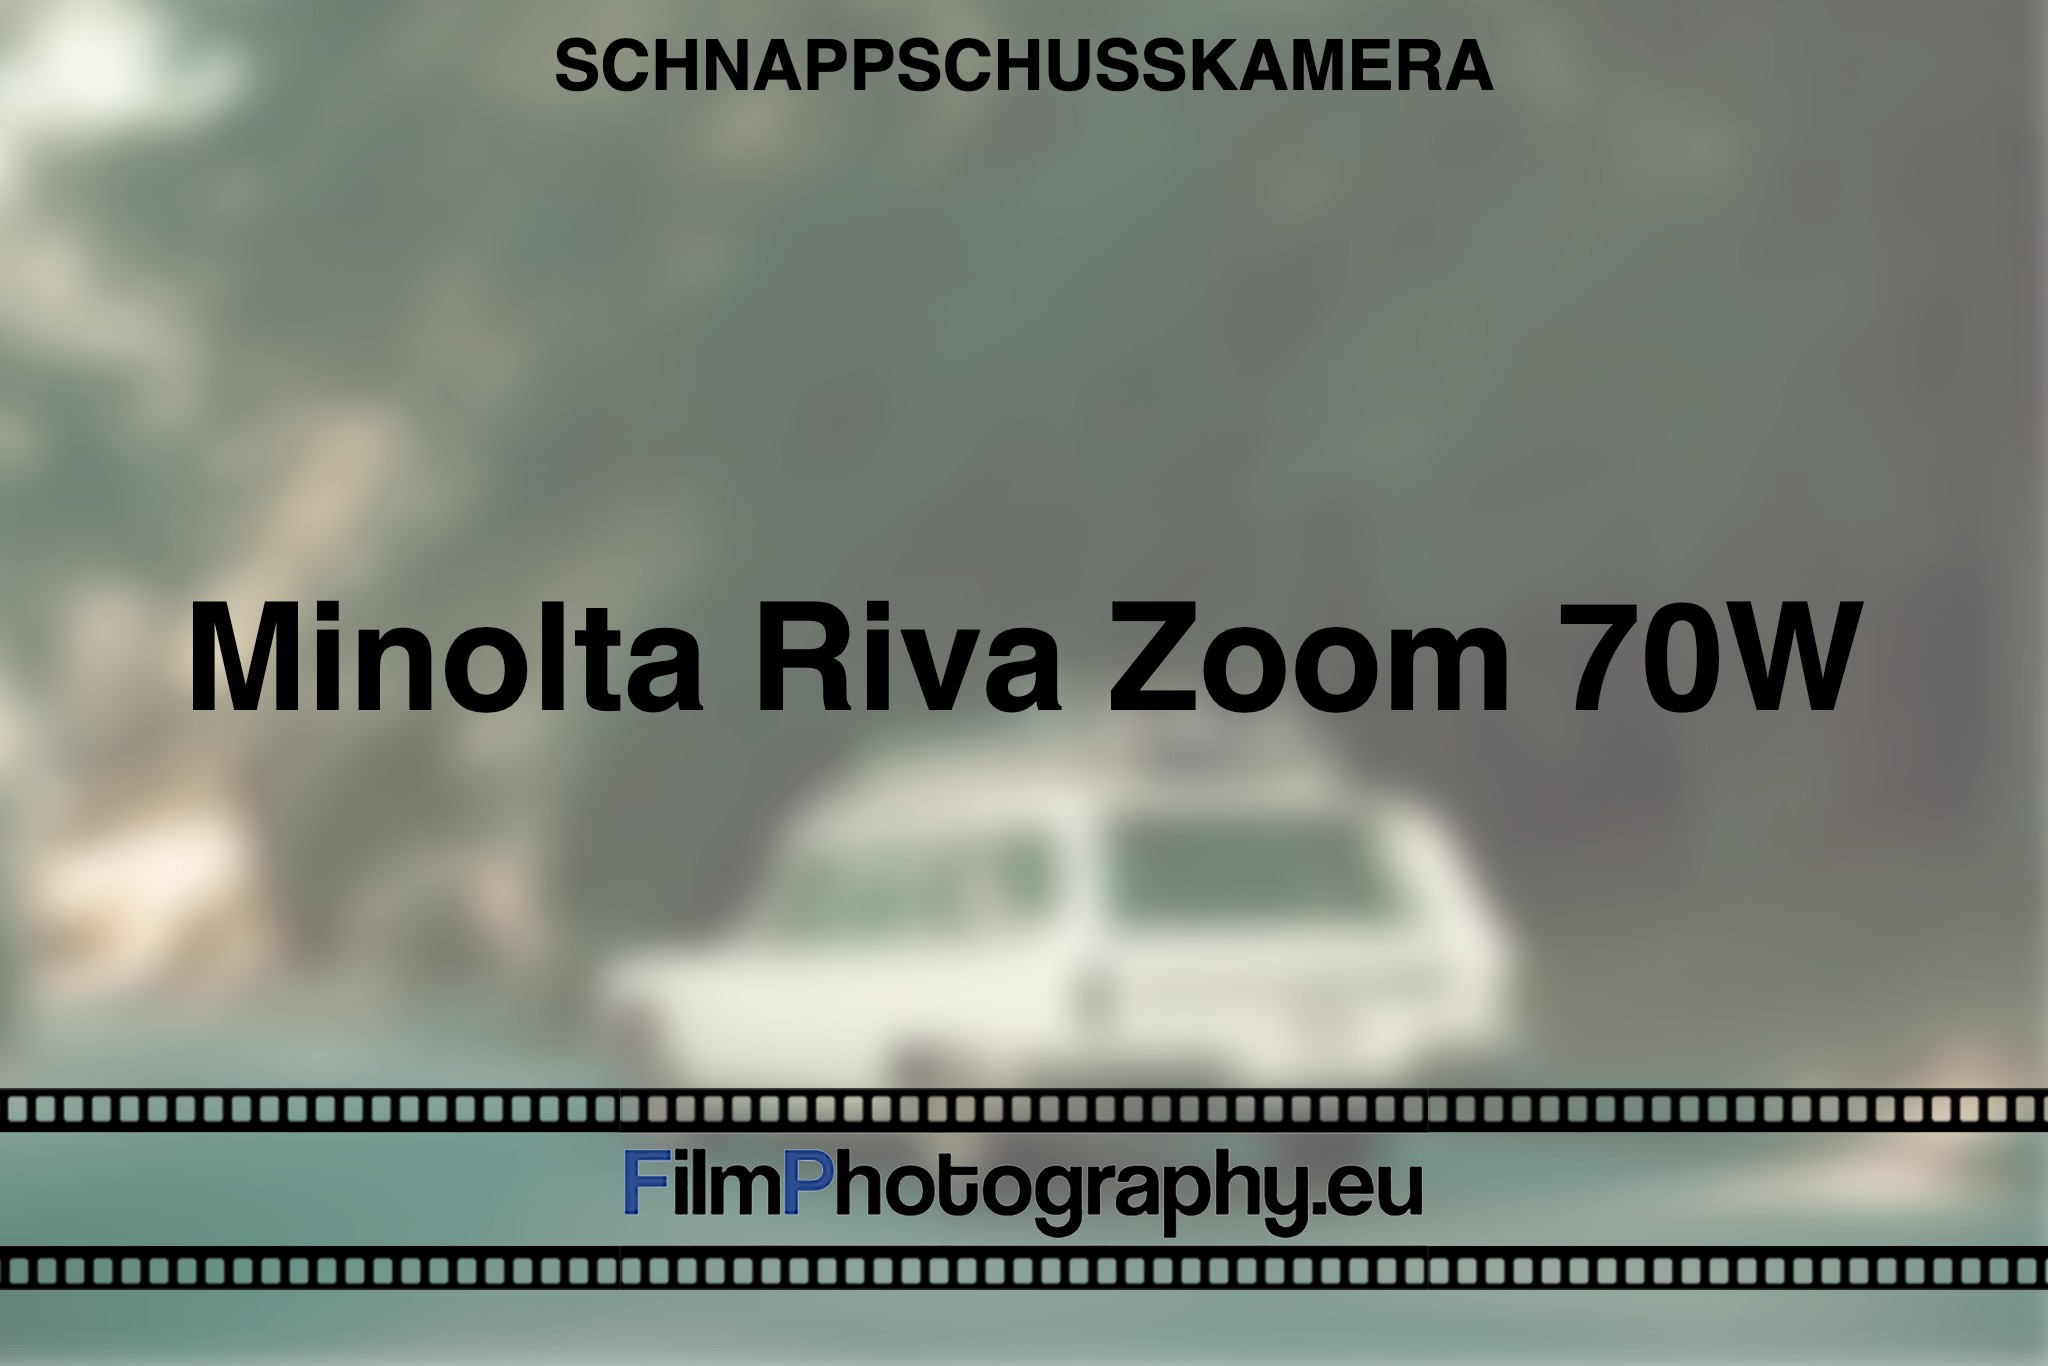 minolta-riva-zoom-70w-schnappschusskamera-bnv